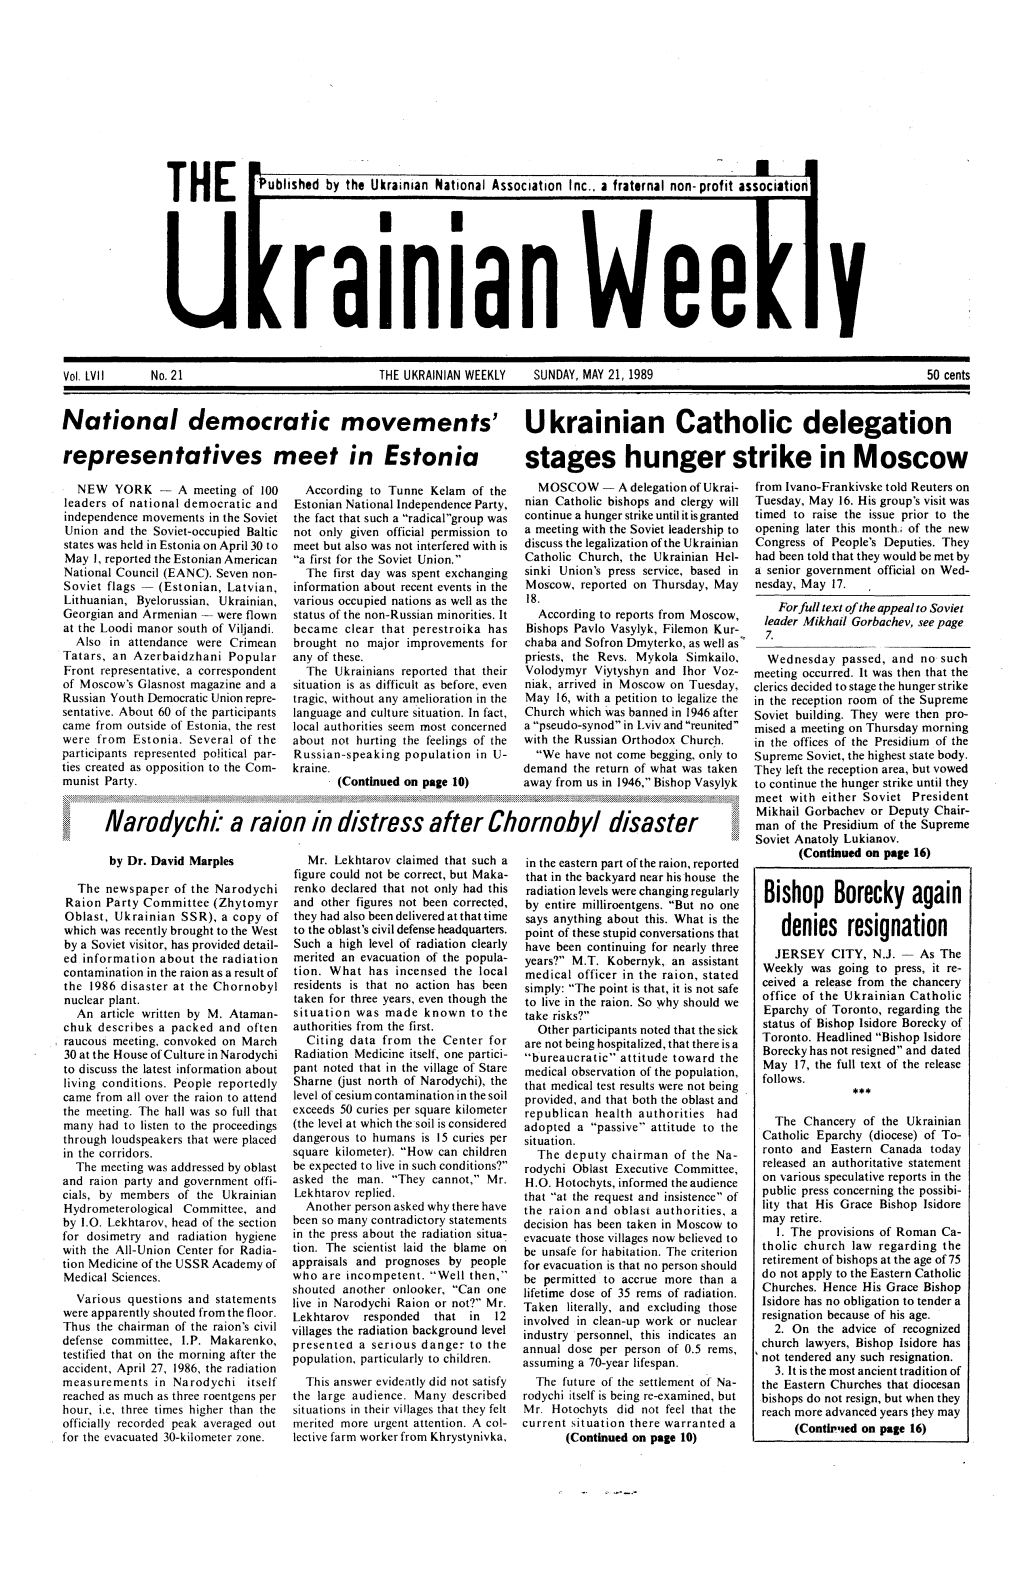 The Ukrainian Weekly 1989, No.21